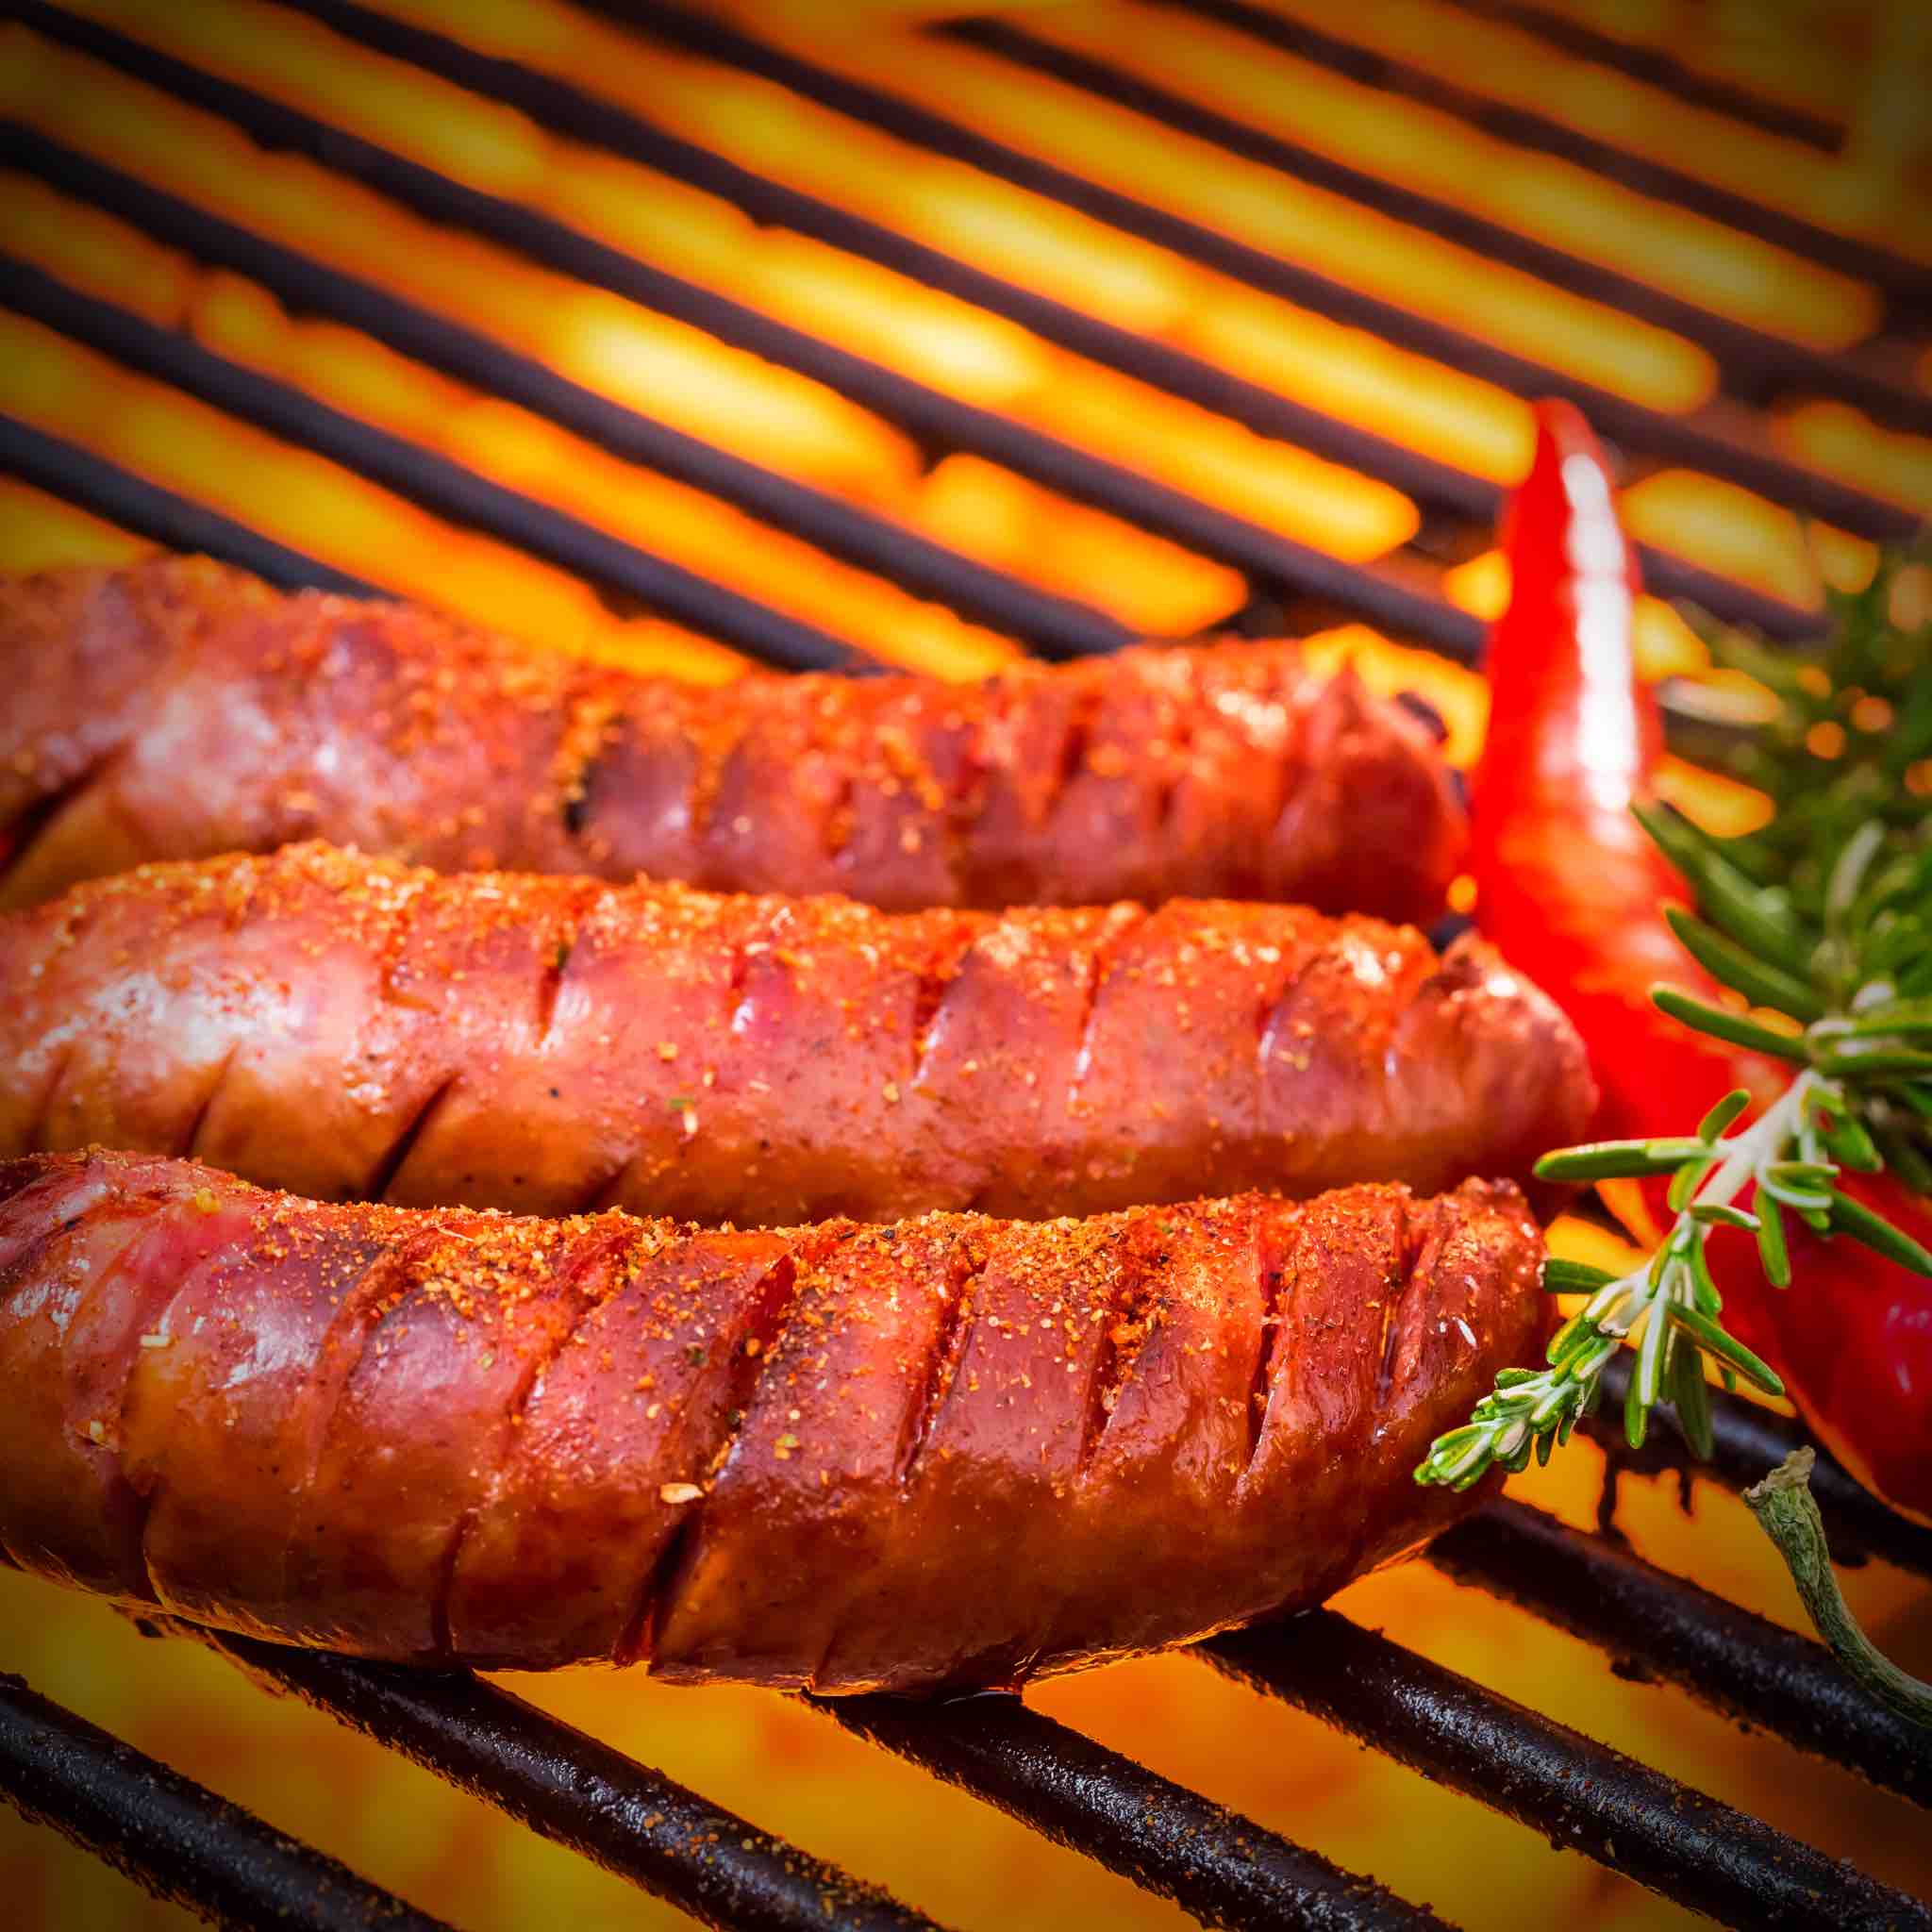 Evergood Louisiana Hot Sausage 12 oz